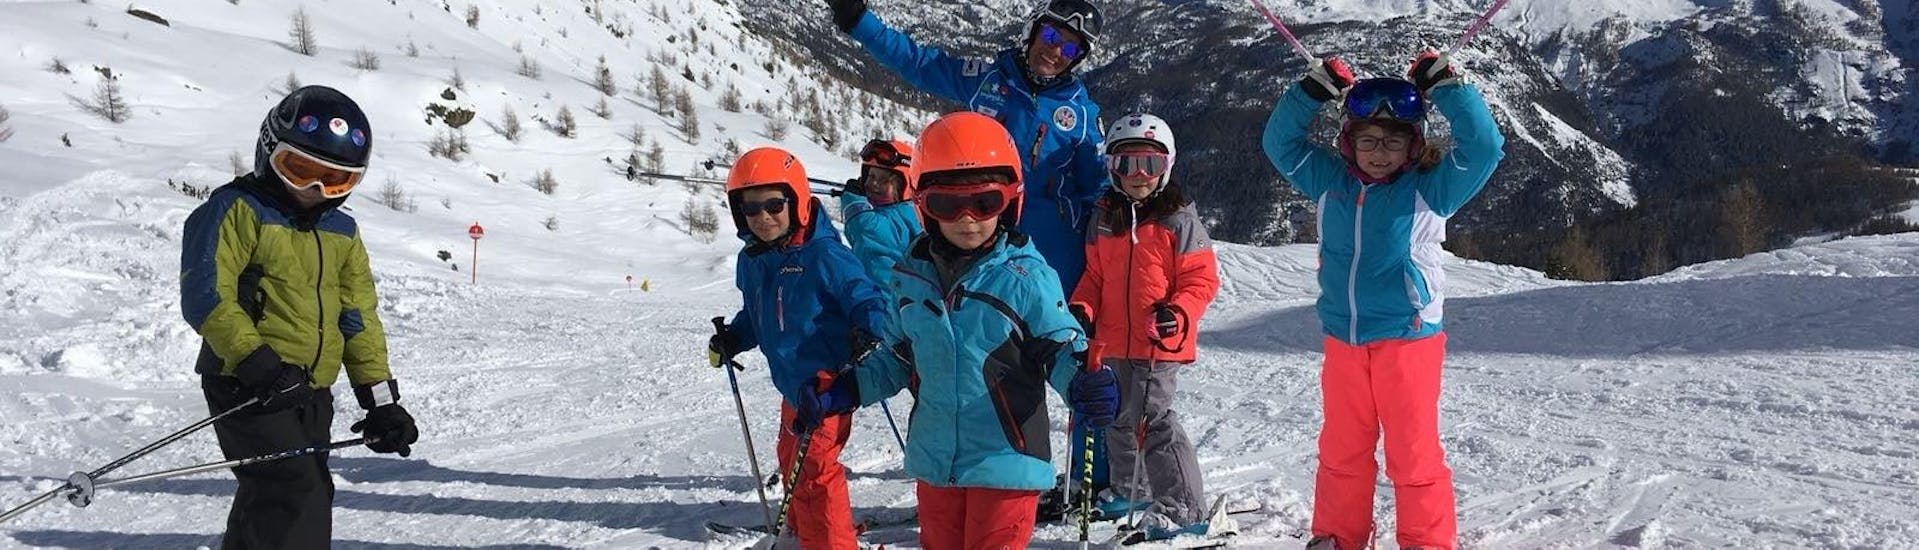 Kids having fun during the Kids Ski Lessons (6-12 y.) for All Levels of the Enjoyski School Valmalenco.